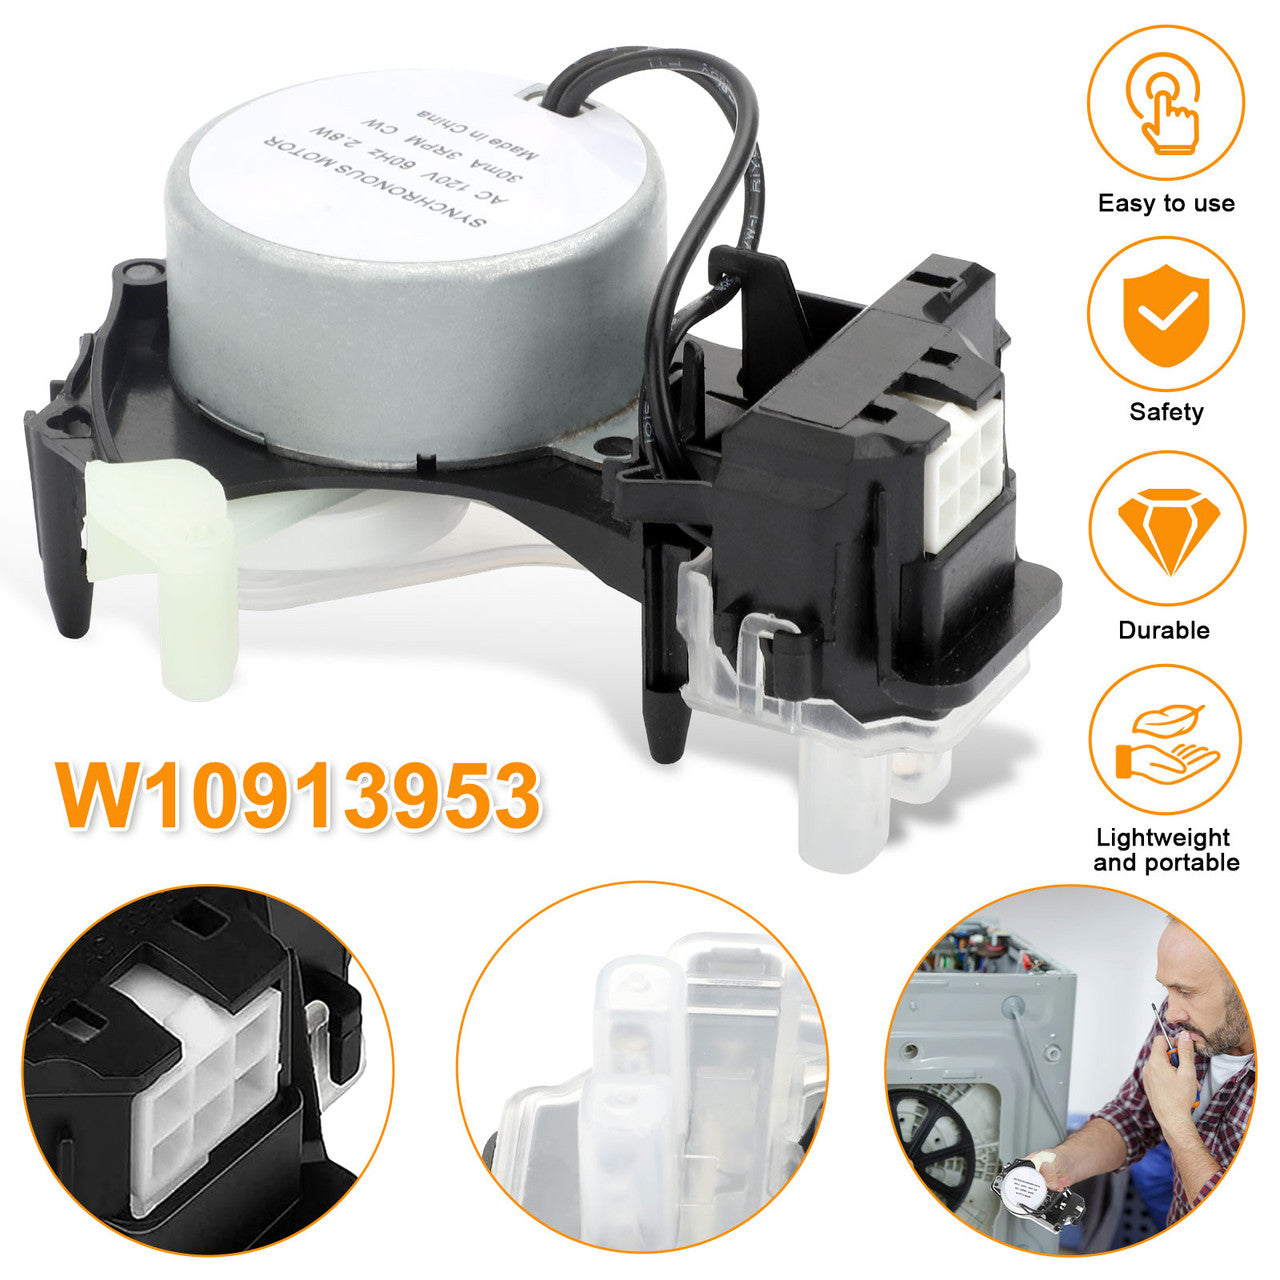 W10913953 Washing Machine Shift Actuator - Compatible with Whirlpool, Amana, Crosley, Inglis, Roper washing machines (Silver)